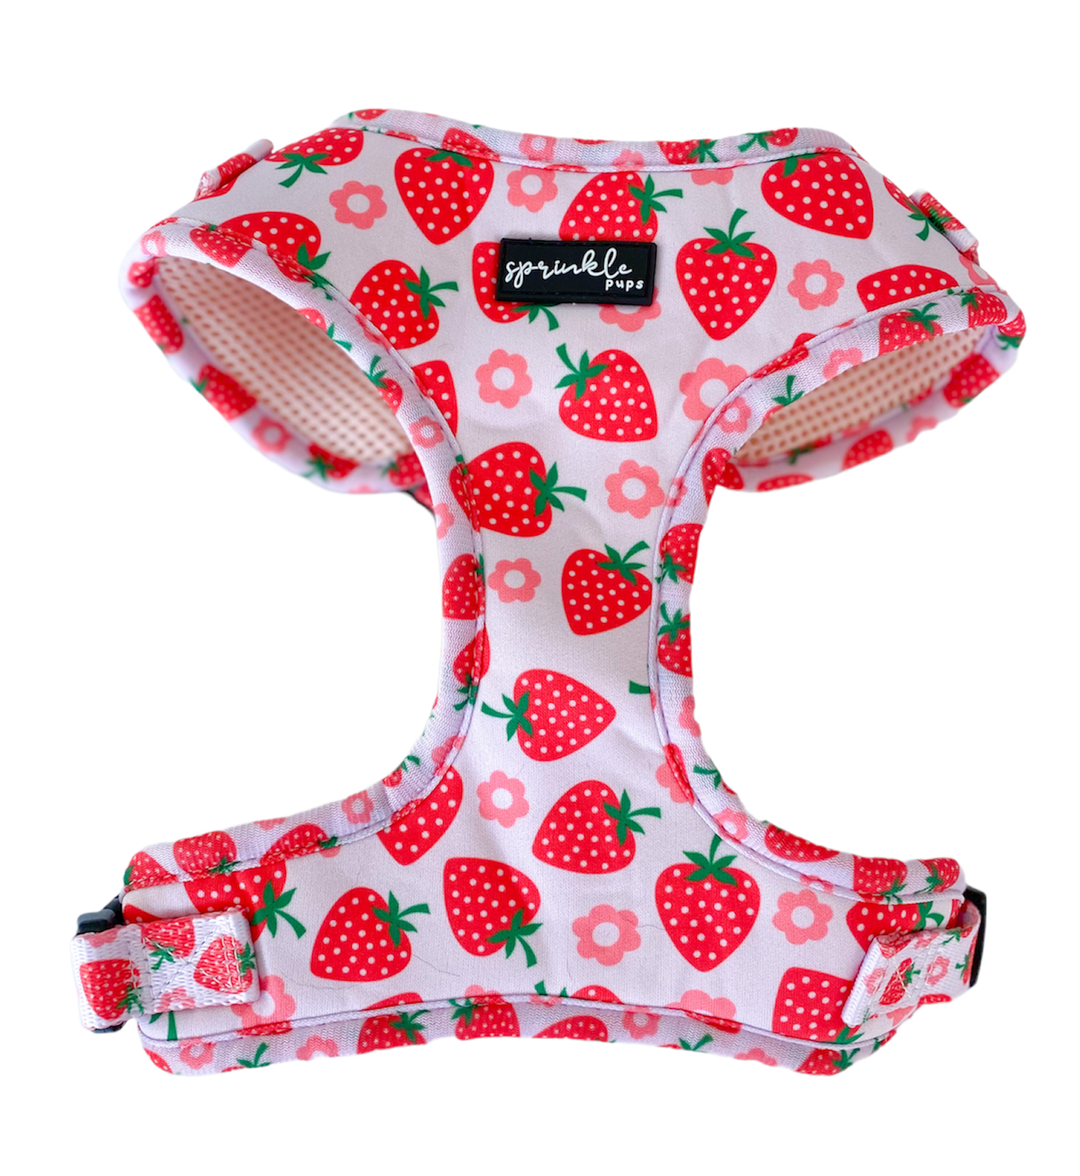 Matching Adjustable Dog Harness, Leash, Poo Bag Set - Strawberry Shortcake